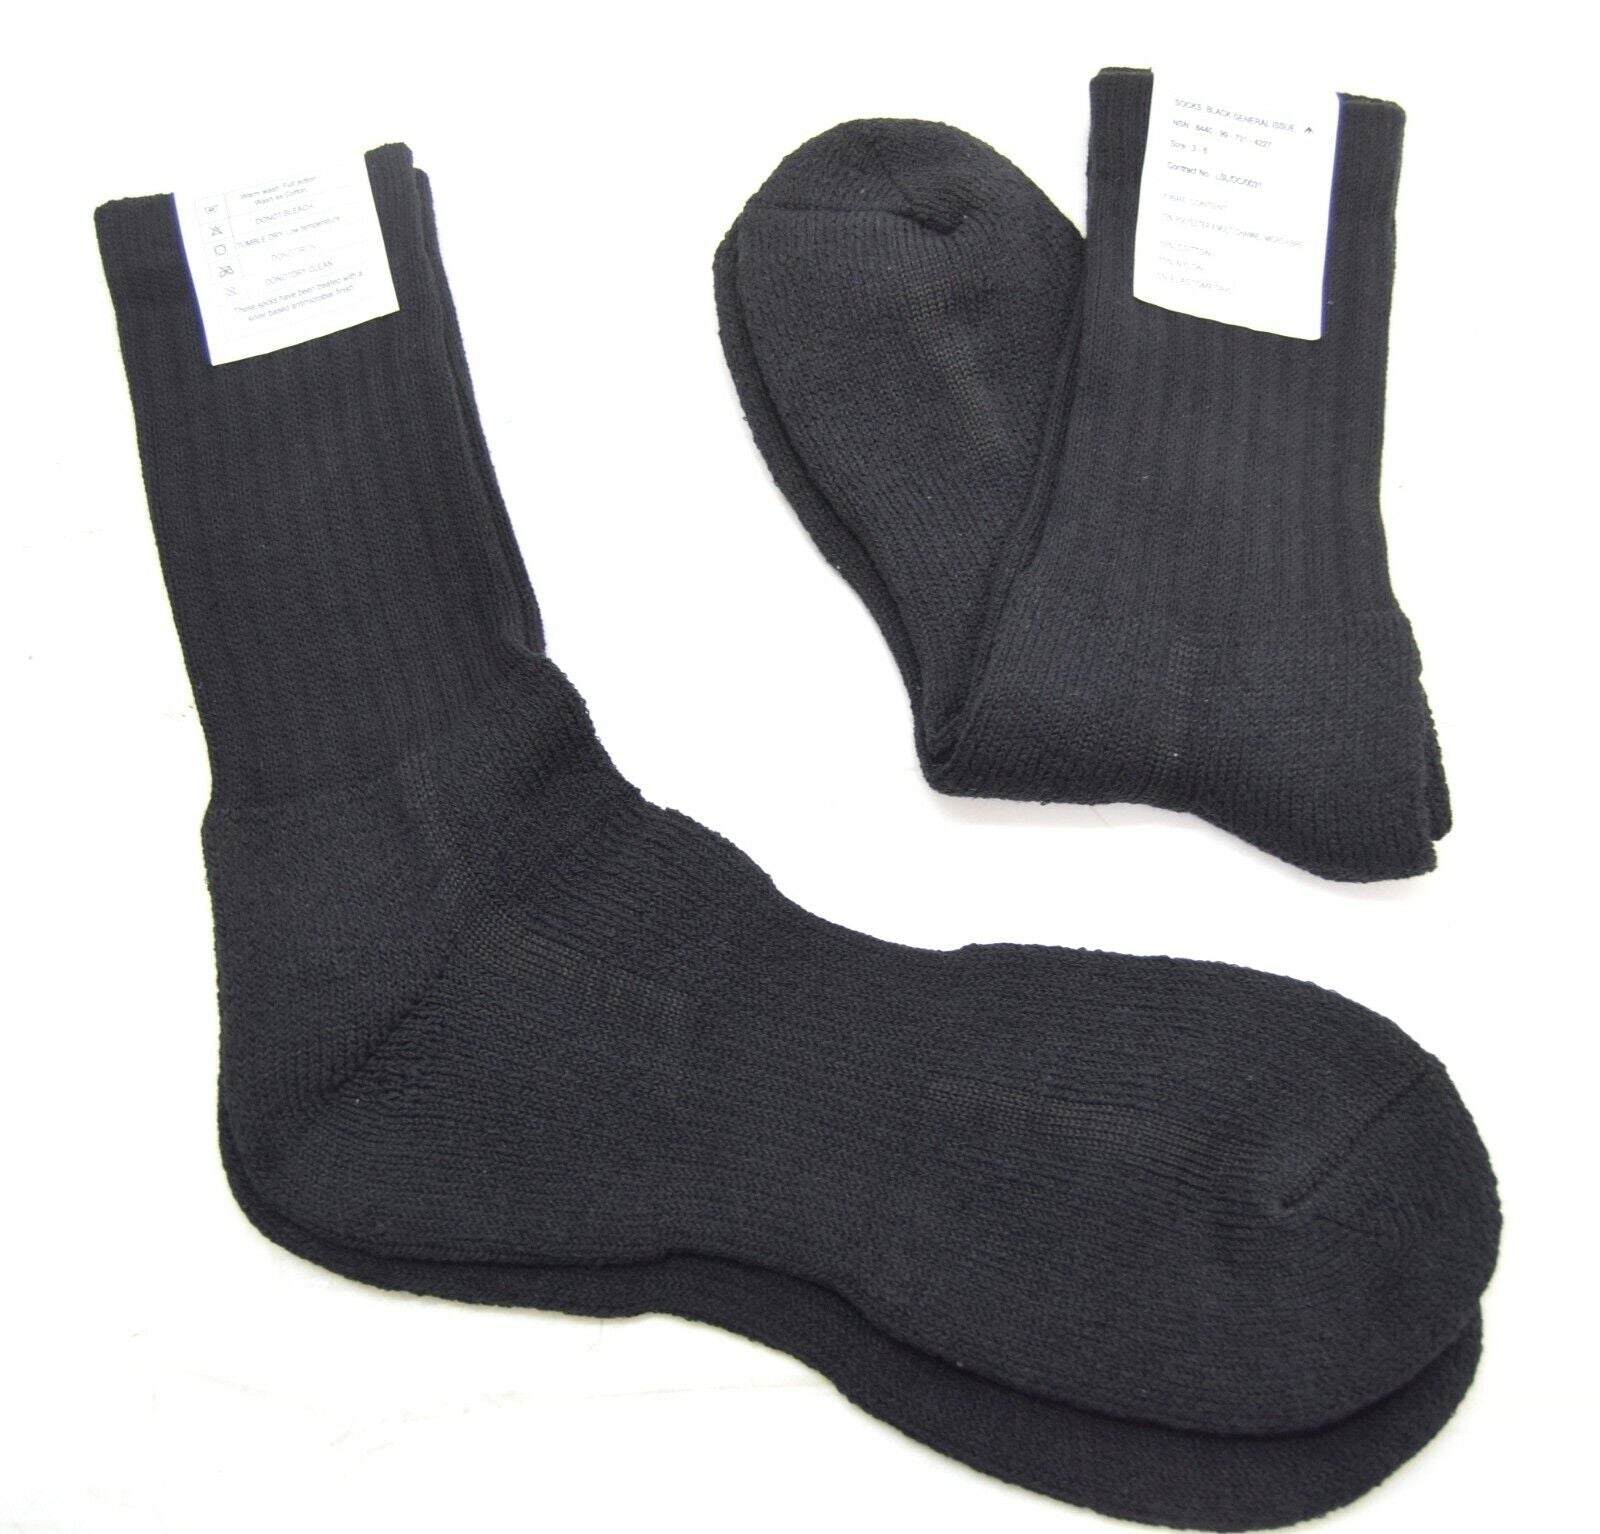 5 x Pairs NEW British Army Black Combat Socks General Issue Cadet Soldier Hiking